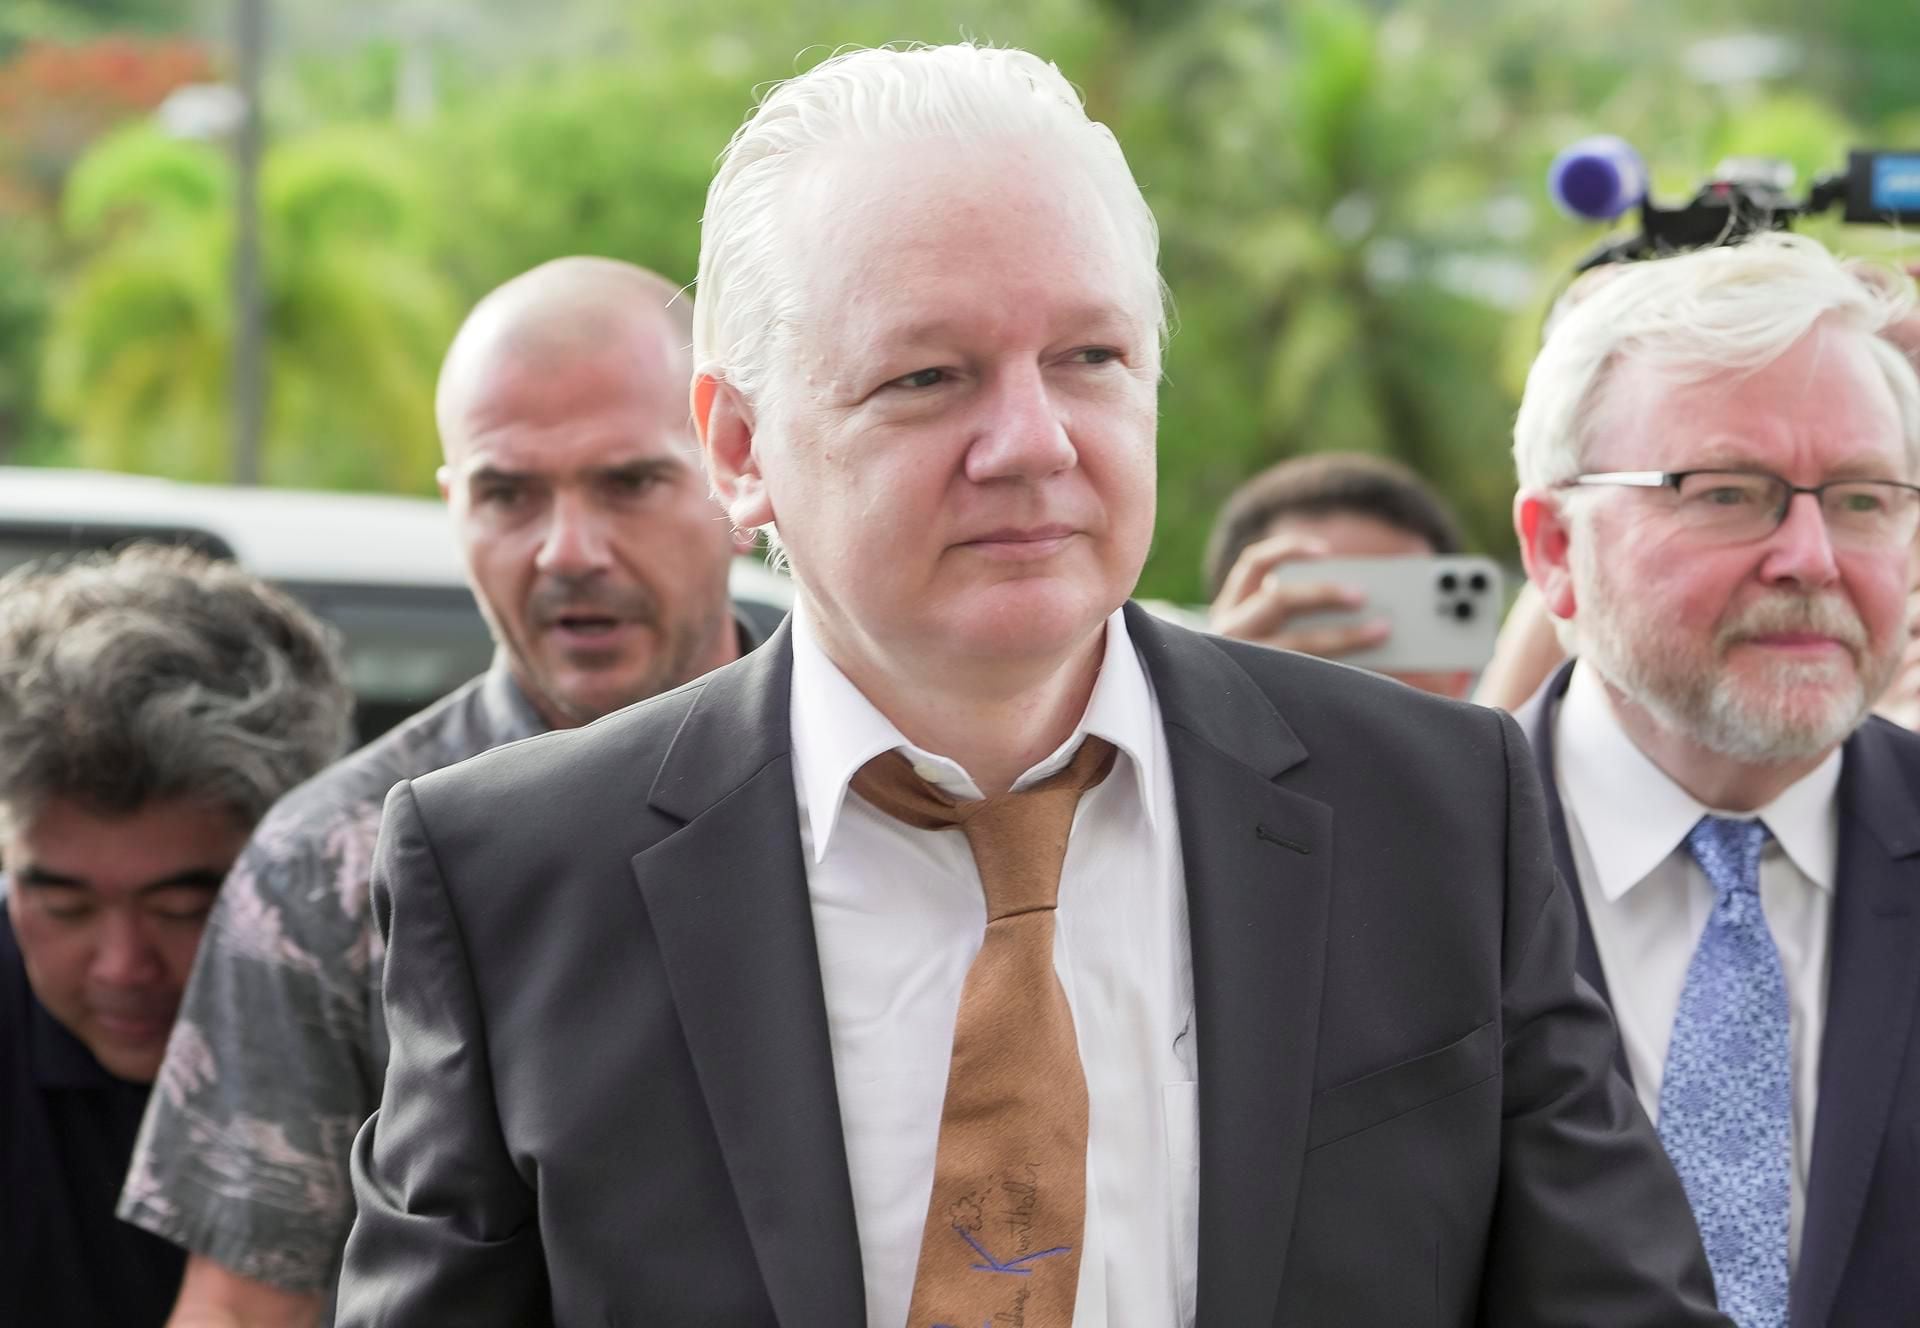 Julian Assange se declara culpable de filtrar documentos clasificados de EU; podrá volver a Australia